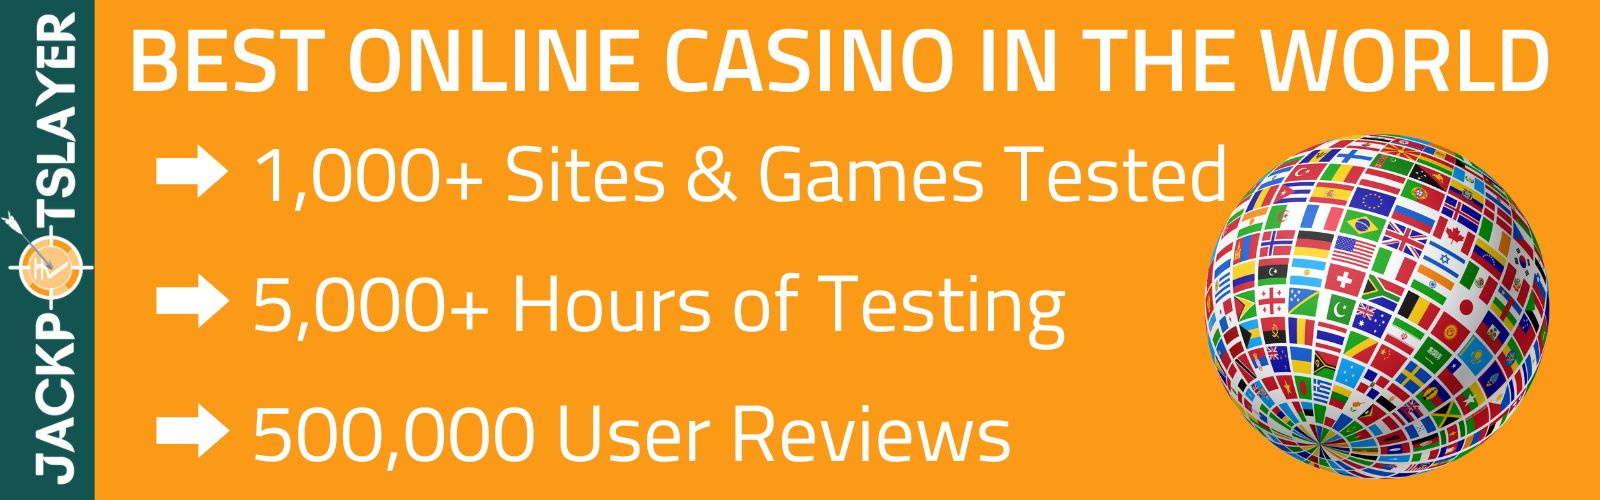 Play at Worldwide Best Online Casino